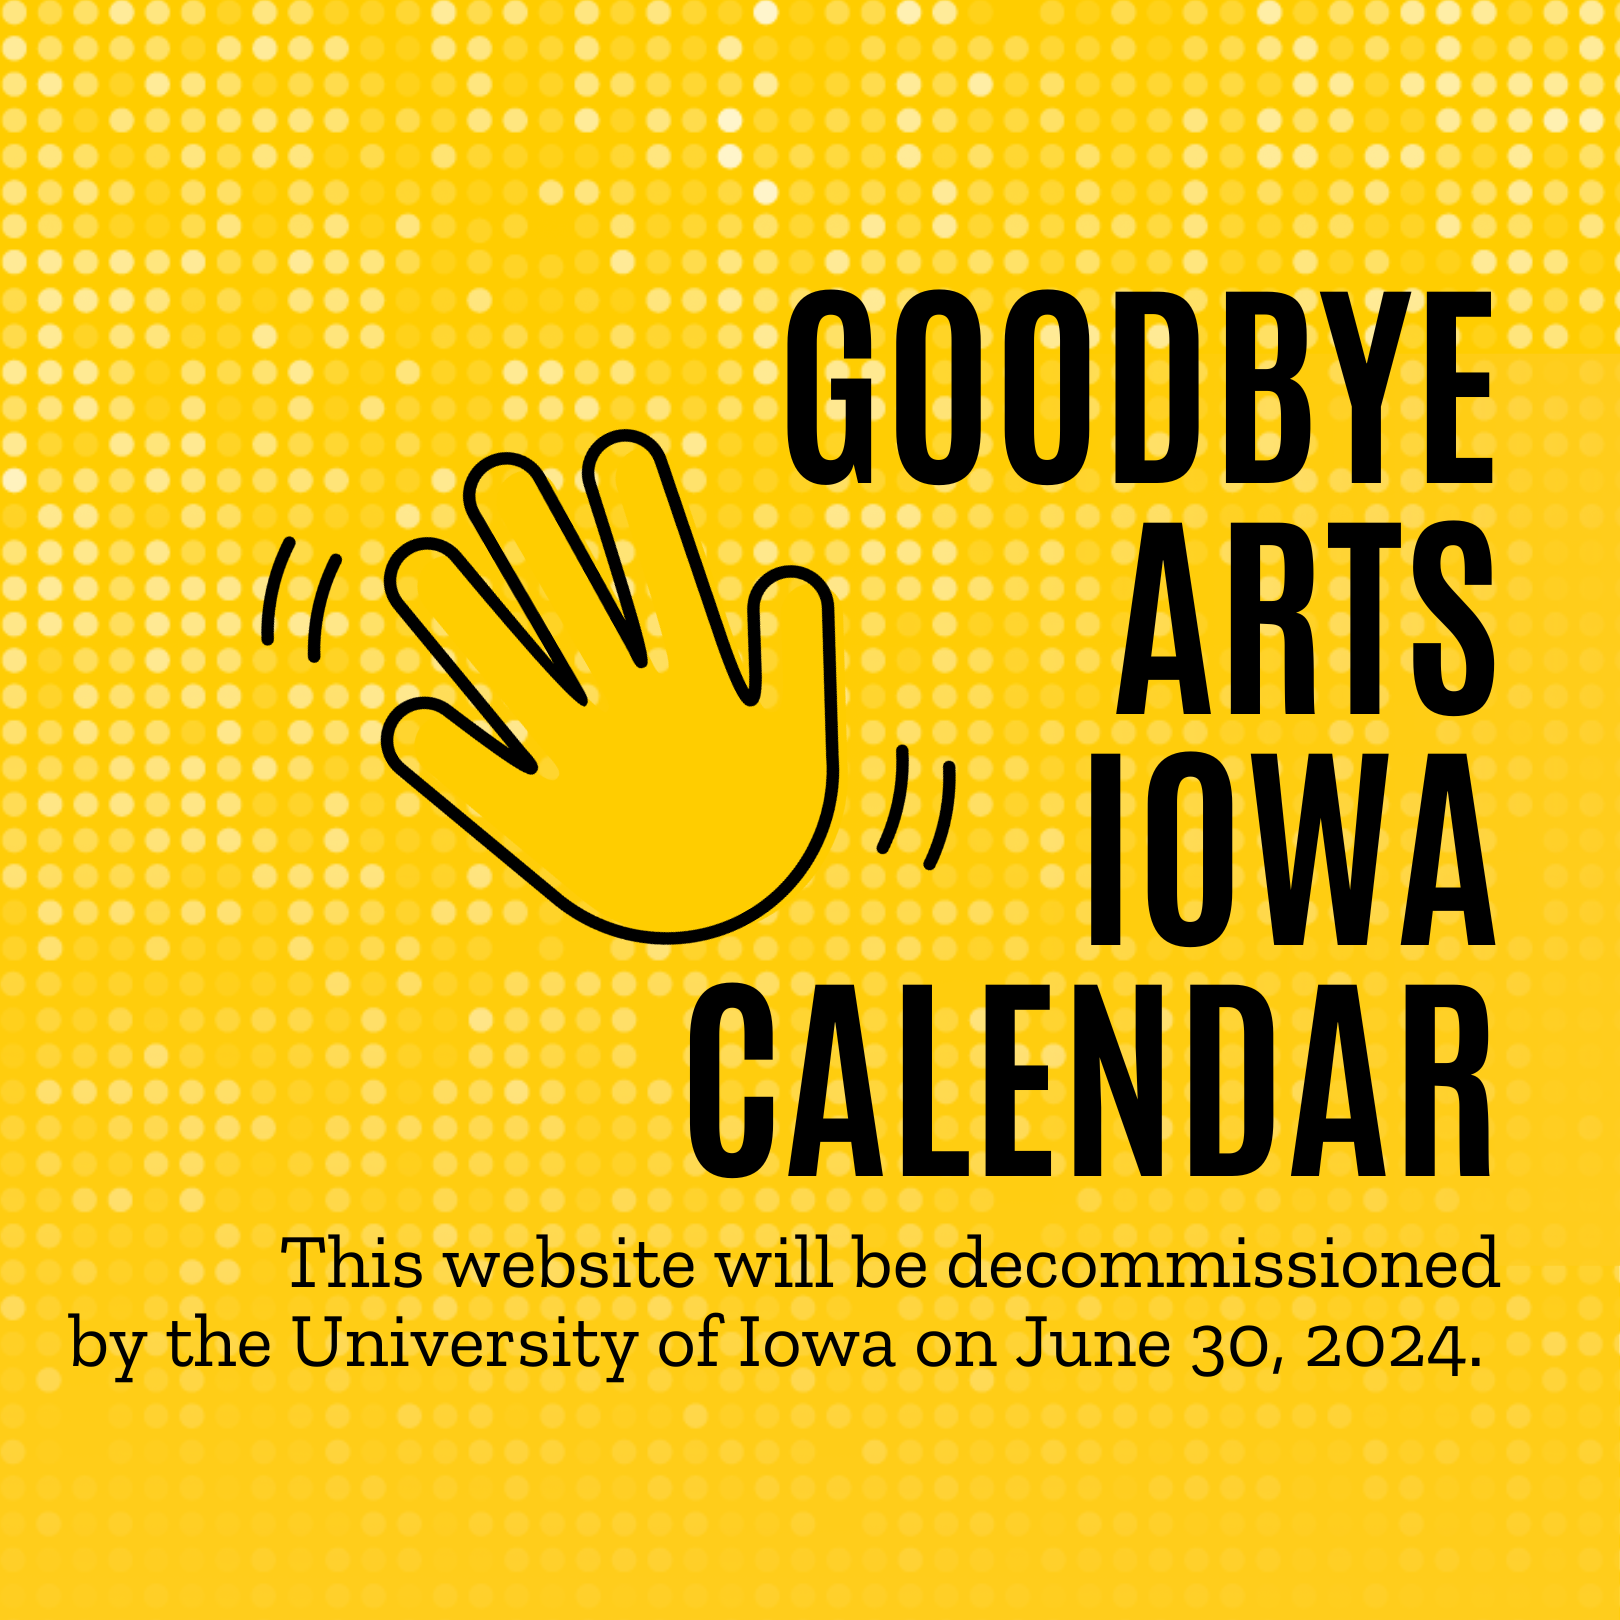 The Arts Iowa calendar will close on June 30, 2024